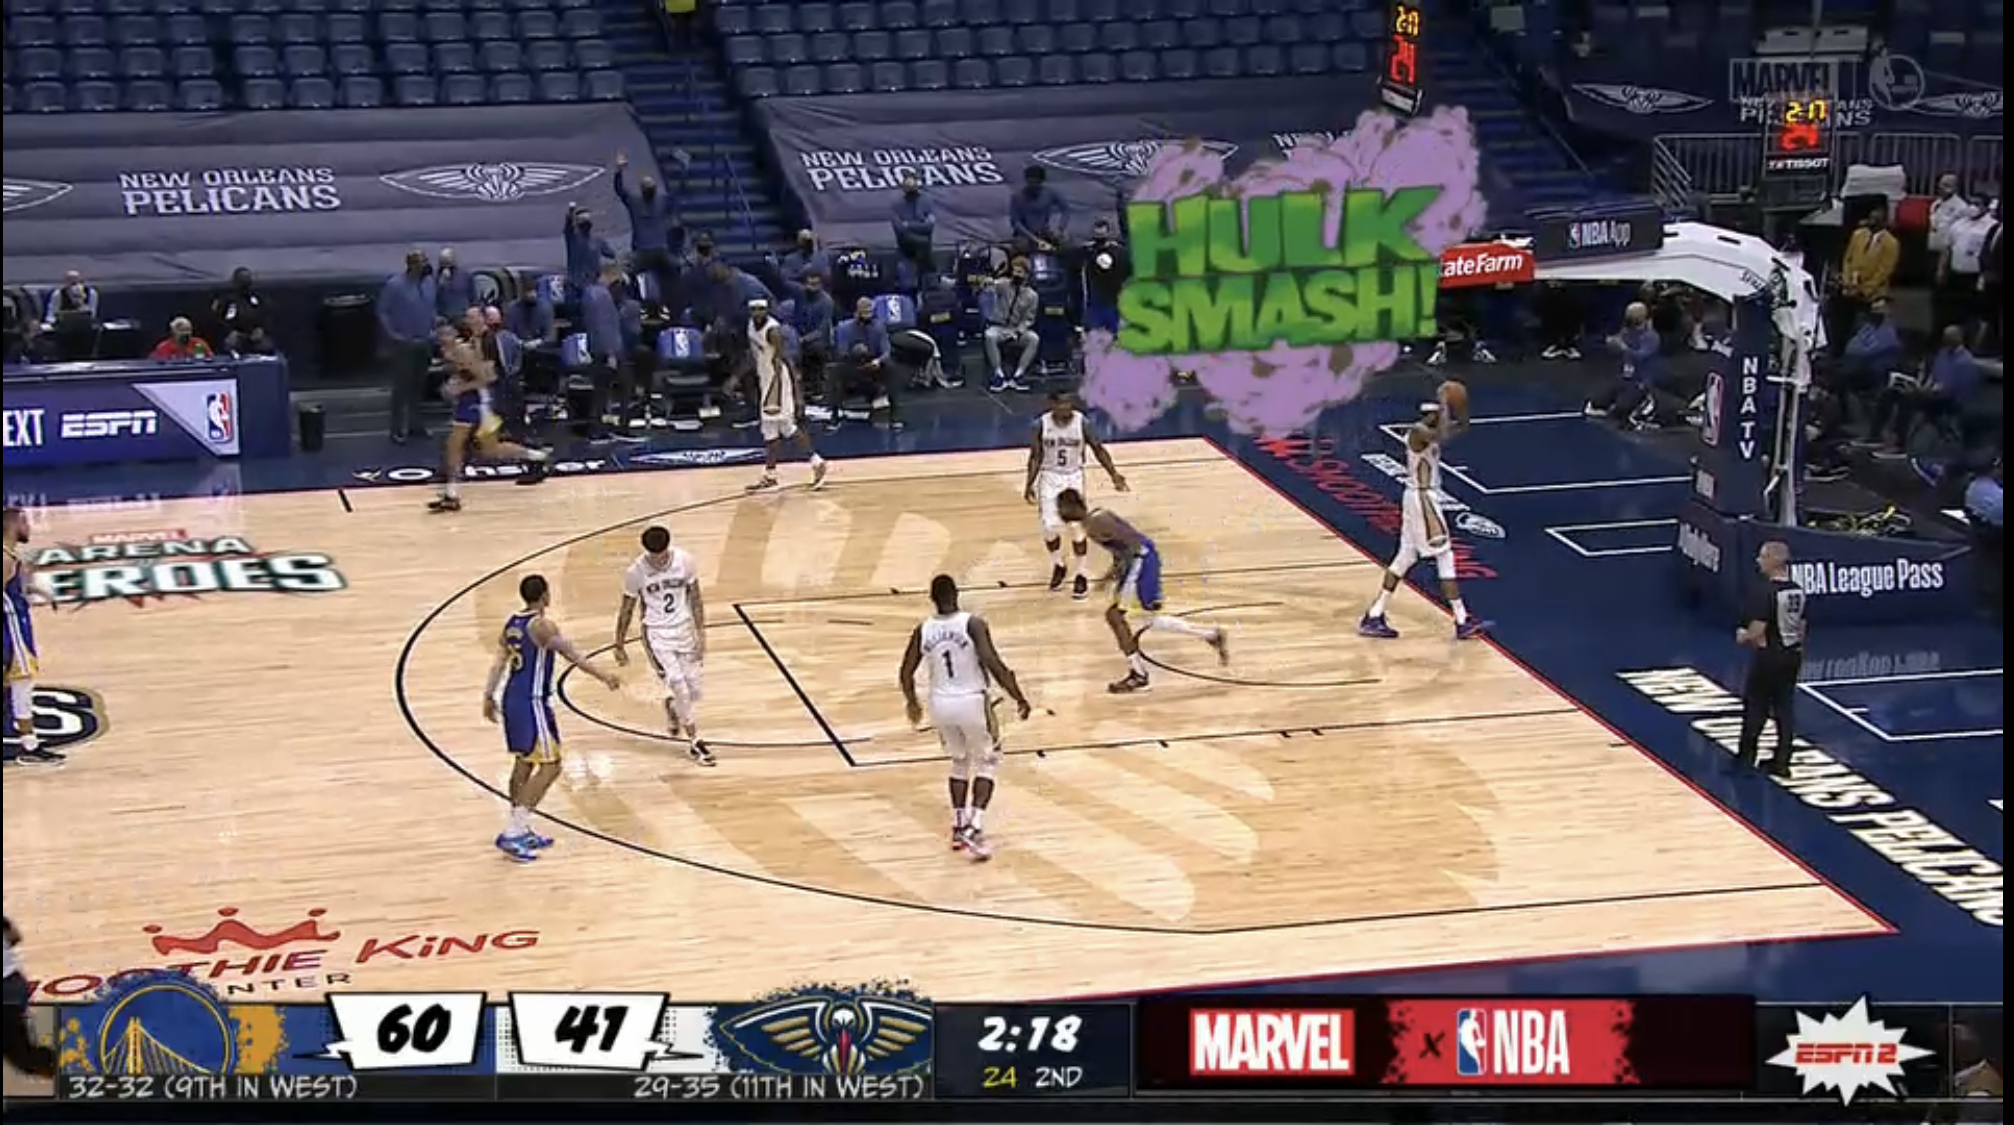 Behind the Scenes of ESPNs Graphics-Laden Marvels Arena of Heroes Alternative NBA Broadcast